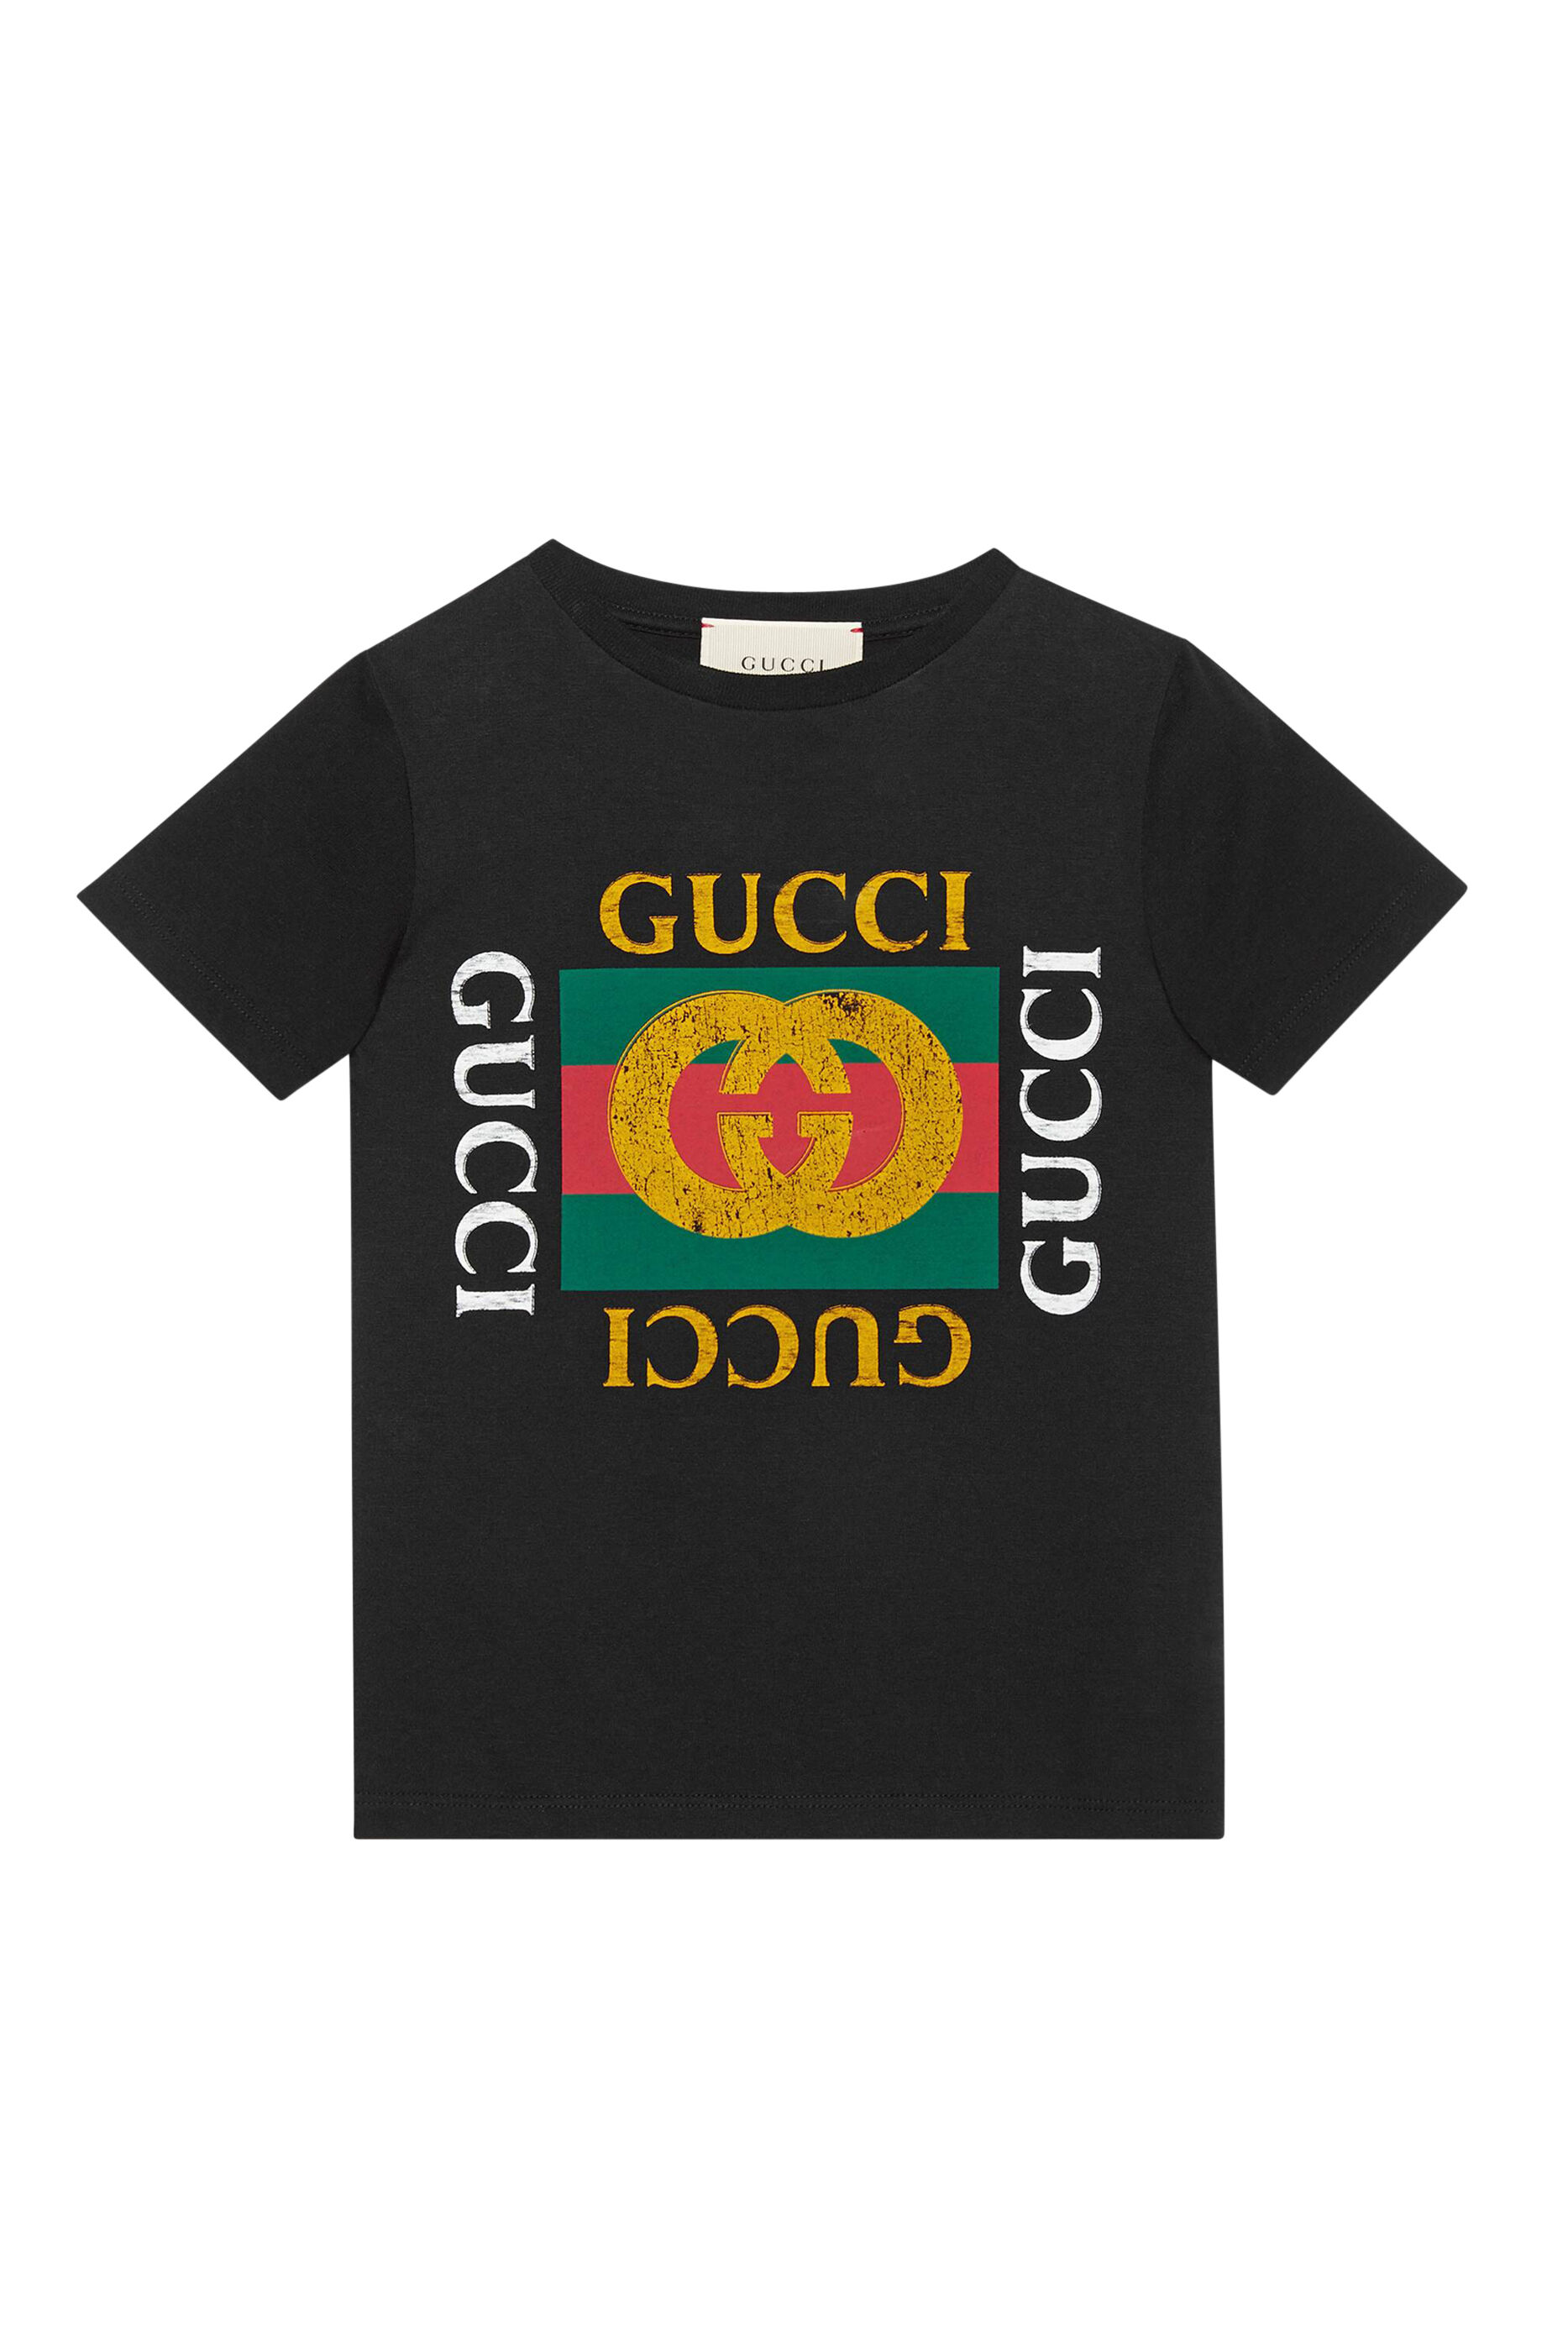 cheap gucci shirts for kids